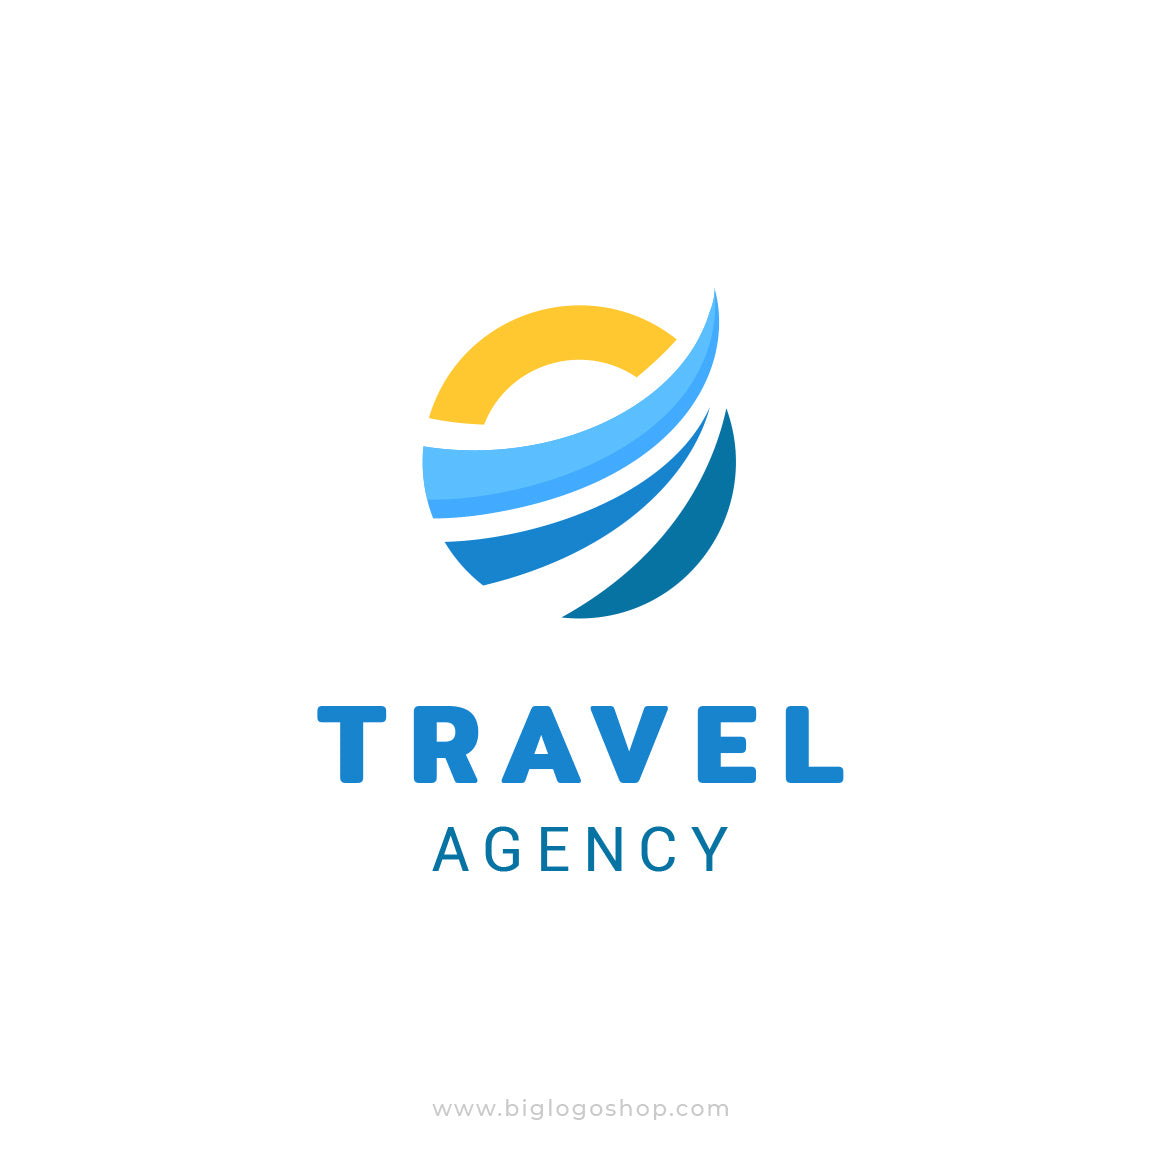 free travel agency logo images